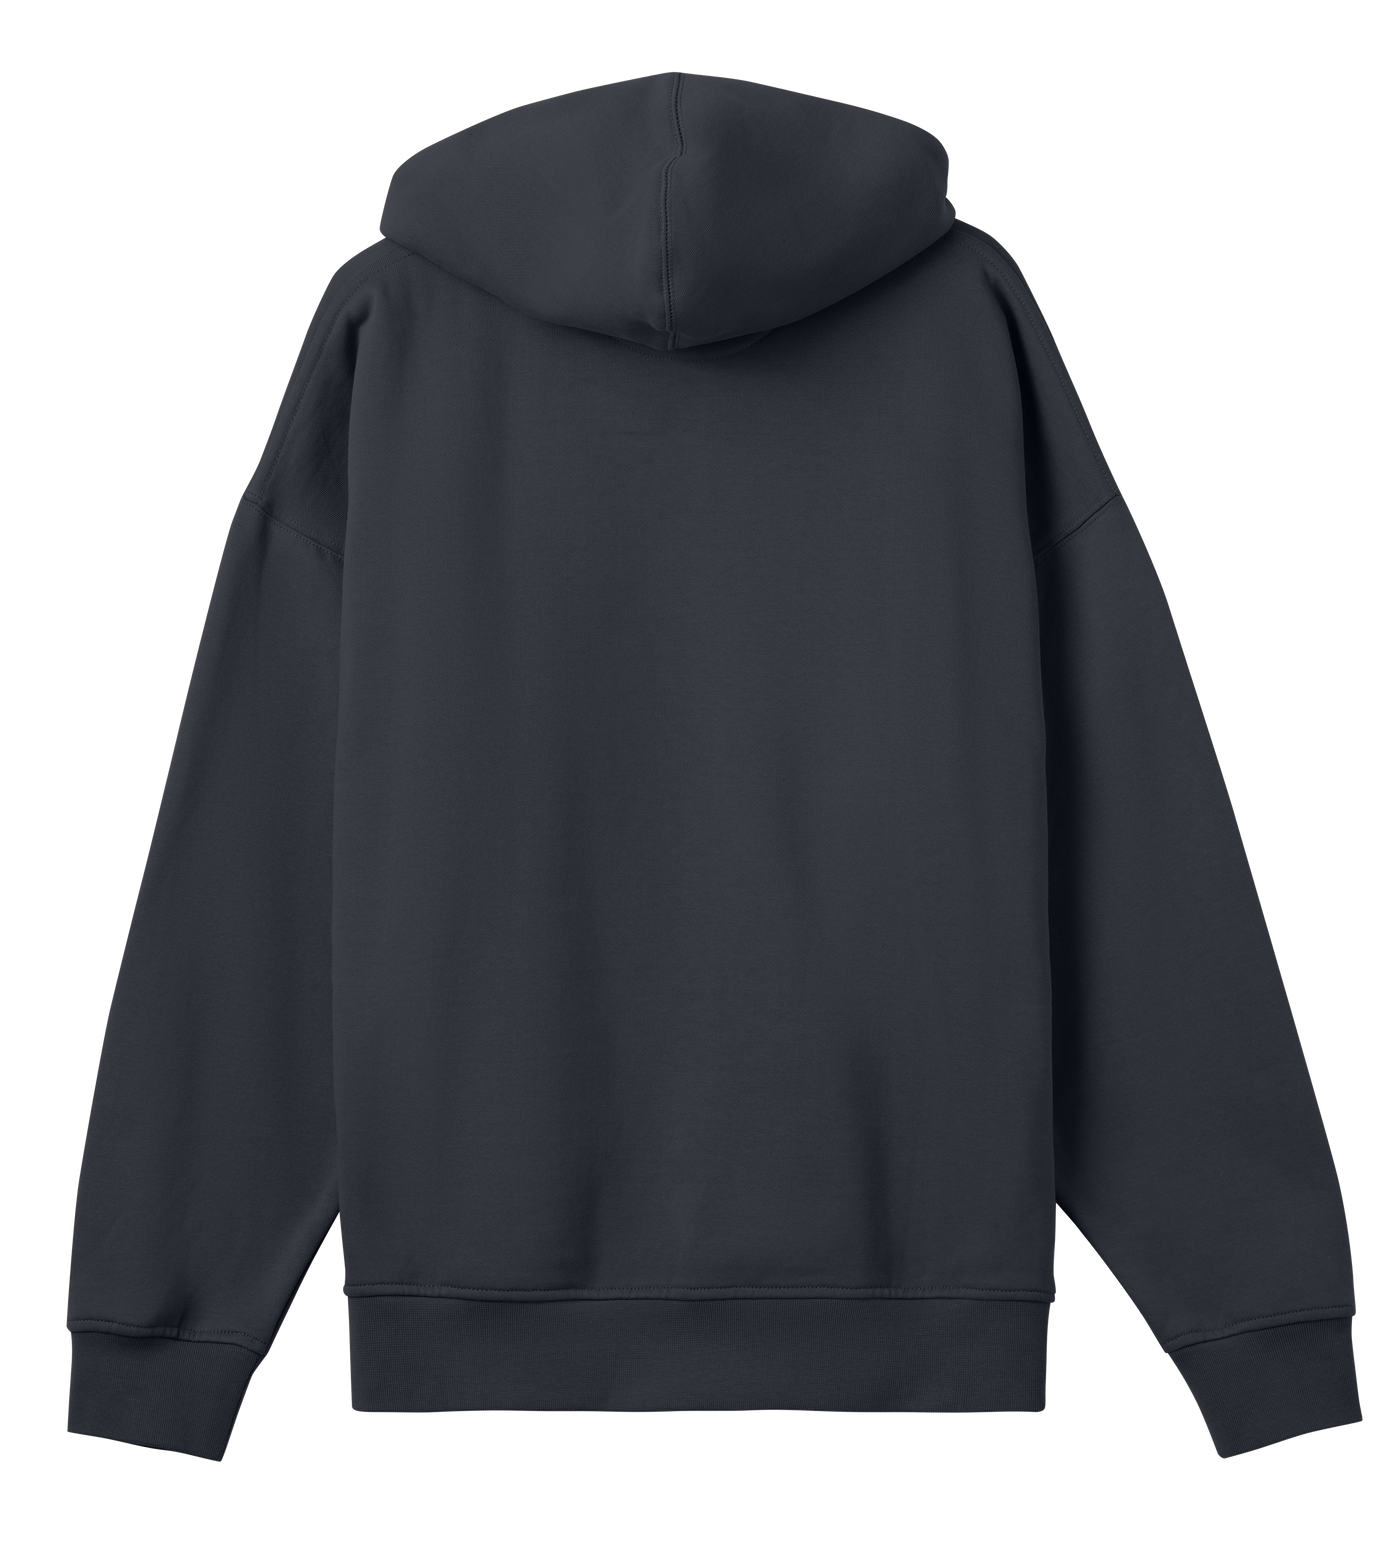 Reyrr Football Boxy Hoodie - Premium hoodie from REYRR STUDIO - Shop now at Reyrr Athletics